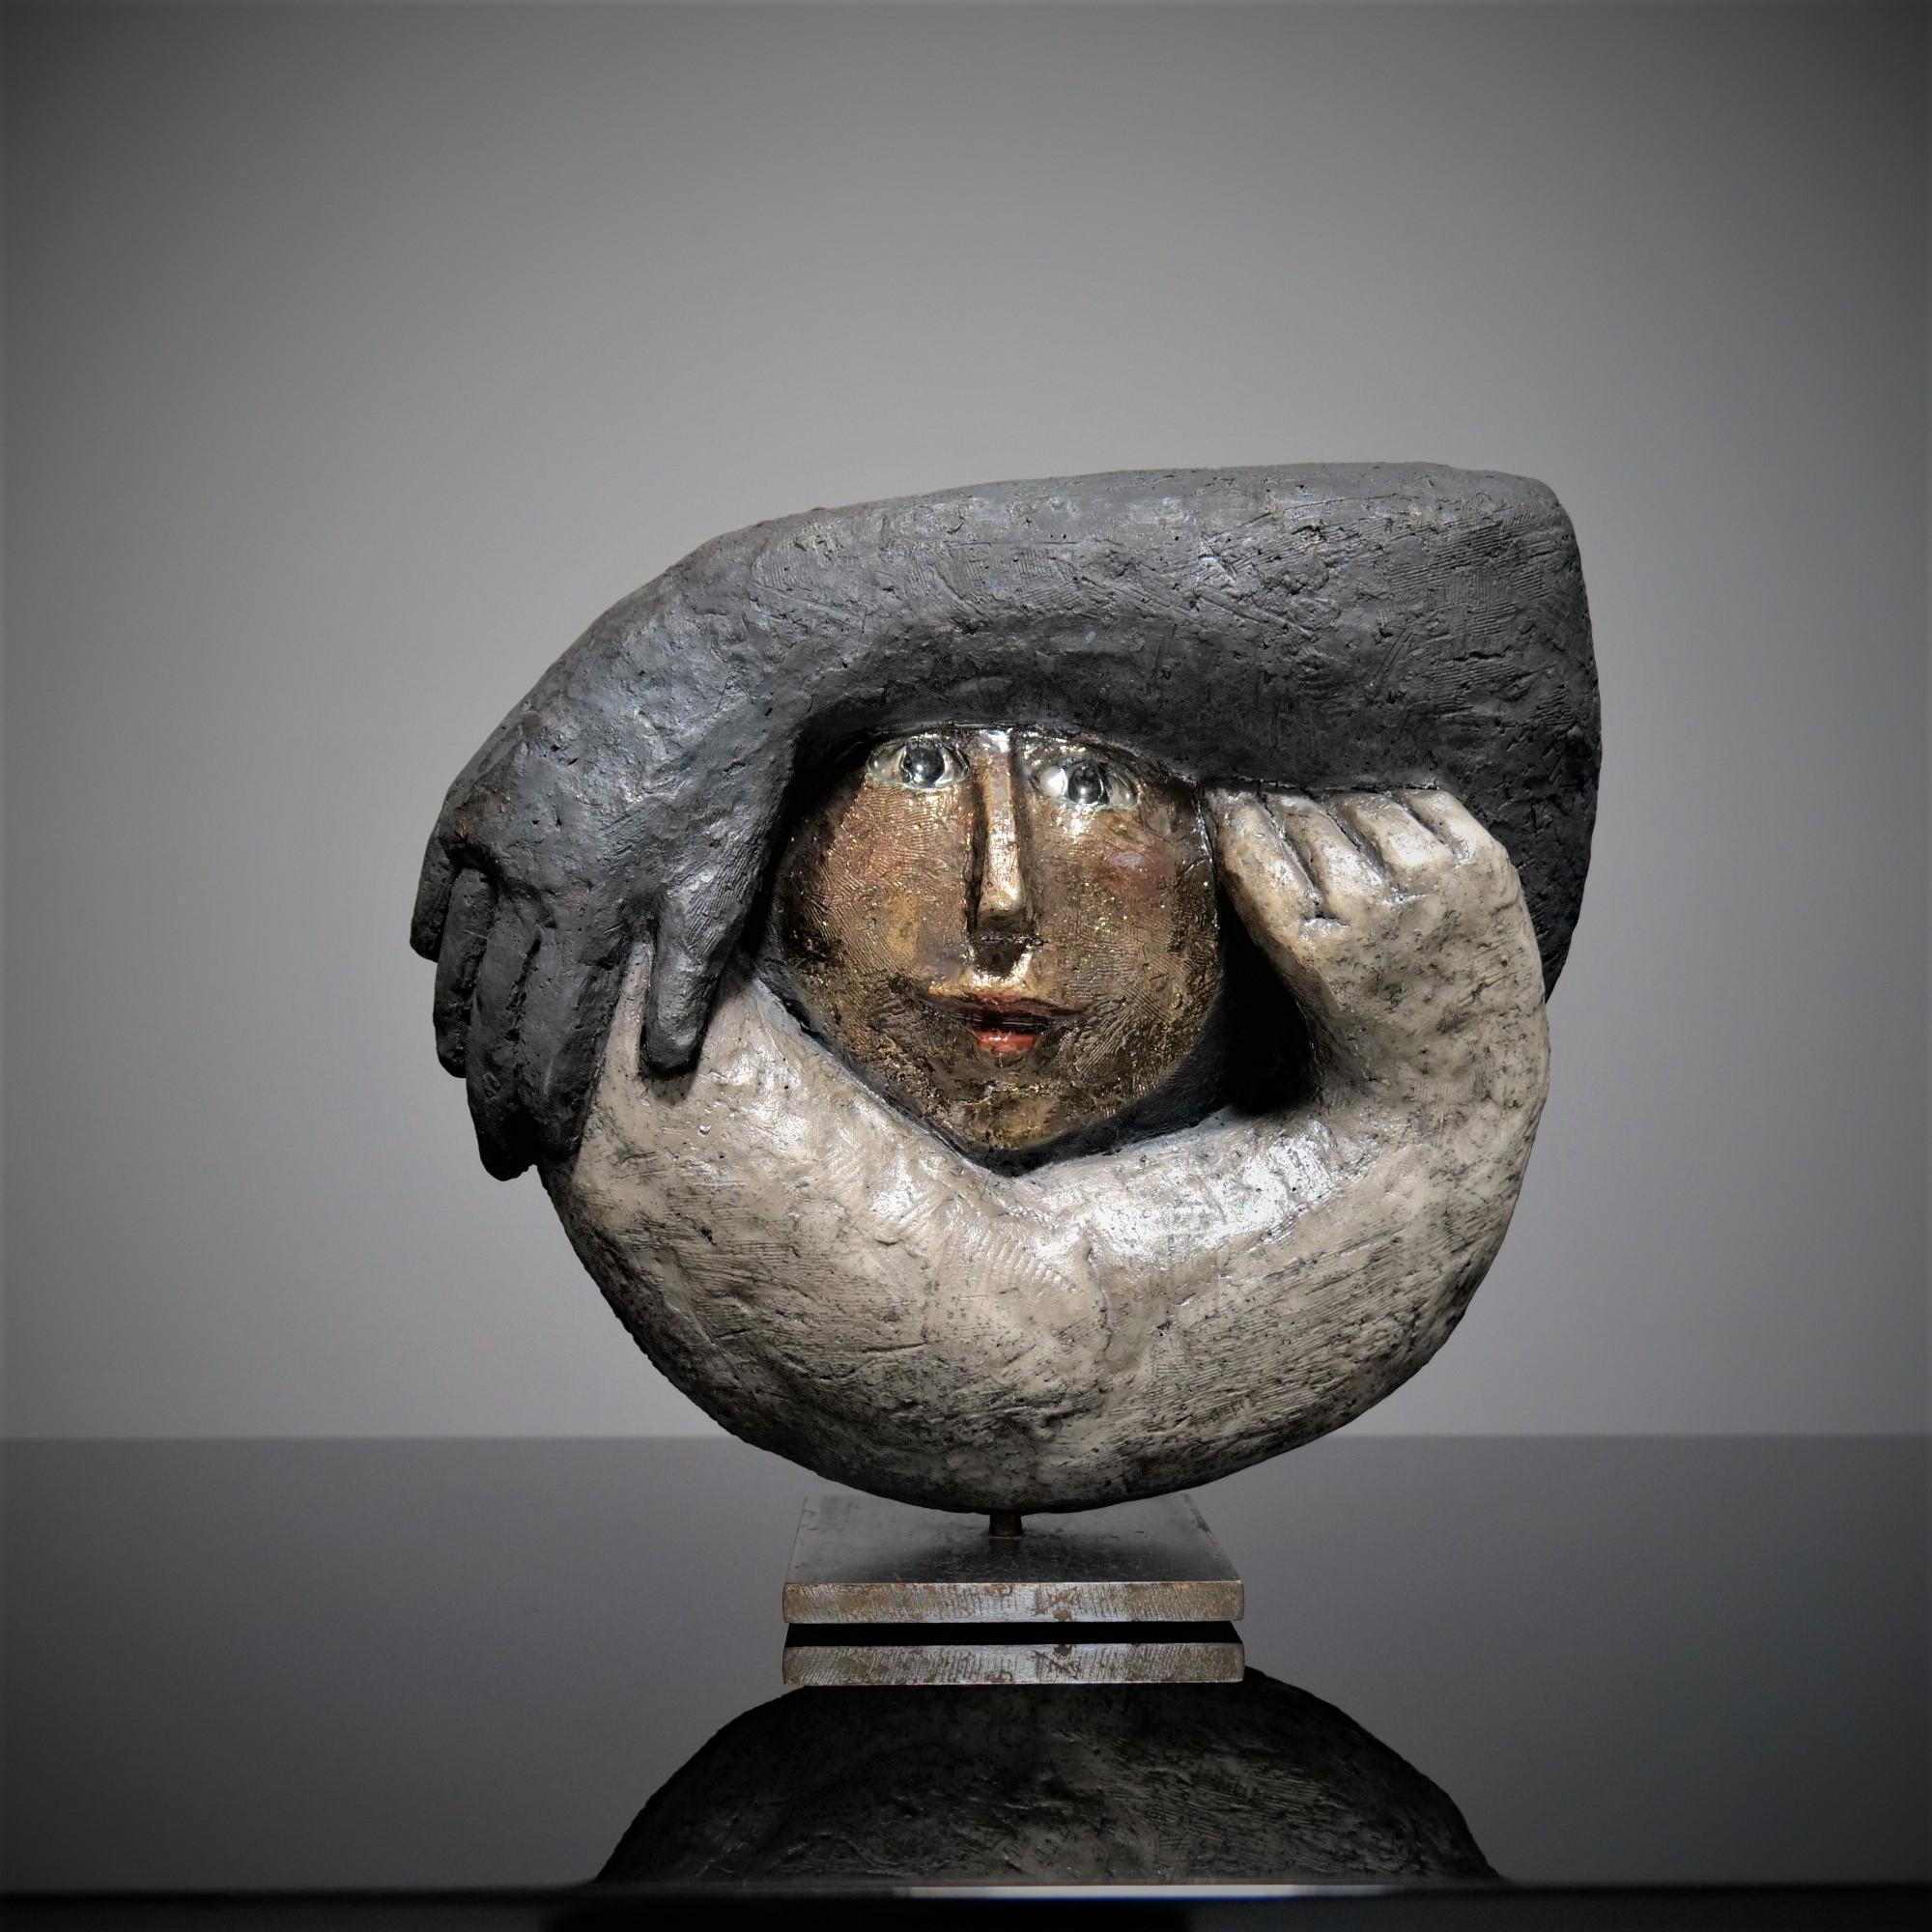 Modern Roger Capron, Double-sided ceramic “Kokon”, 2002